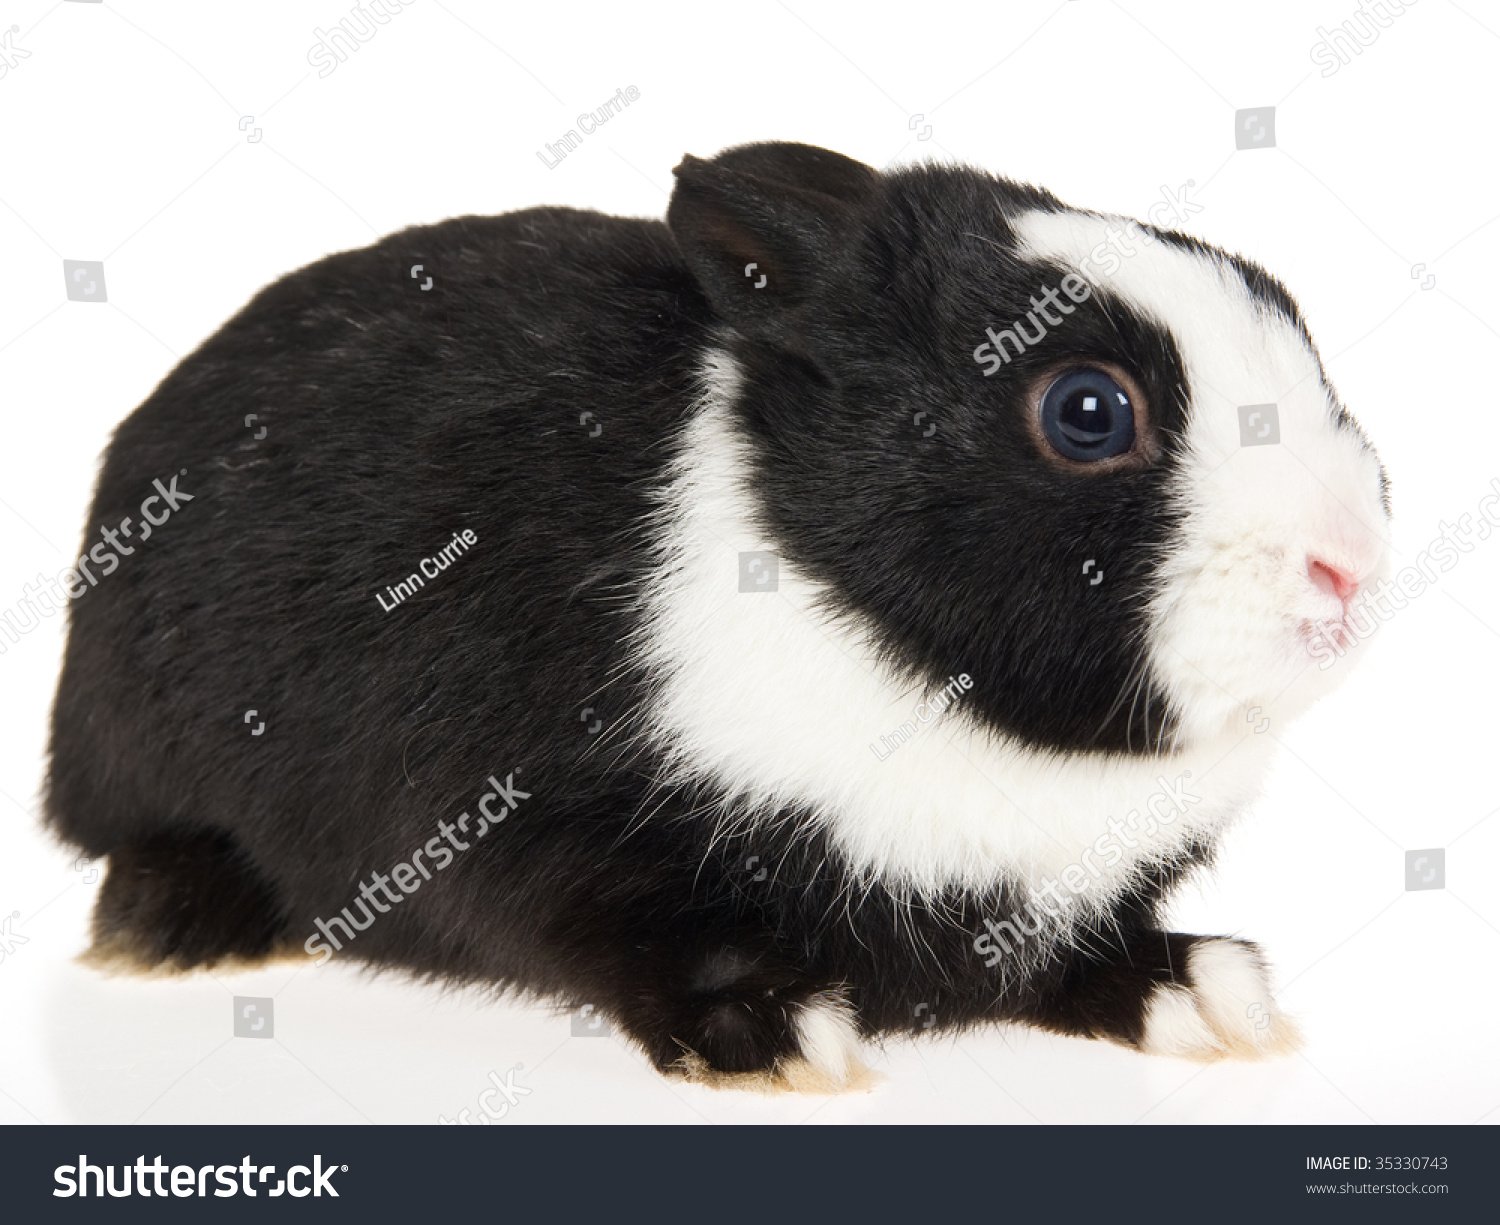 Dutch Black Netherland Dwarf Rabbit On Transportation Stock Image 35330743